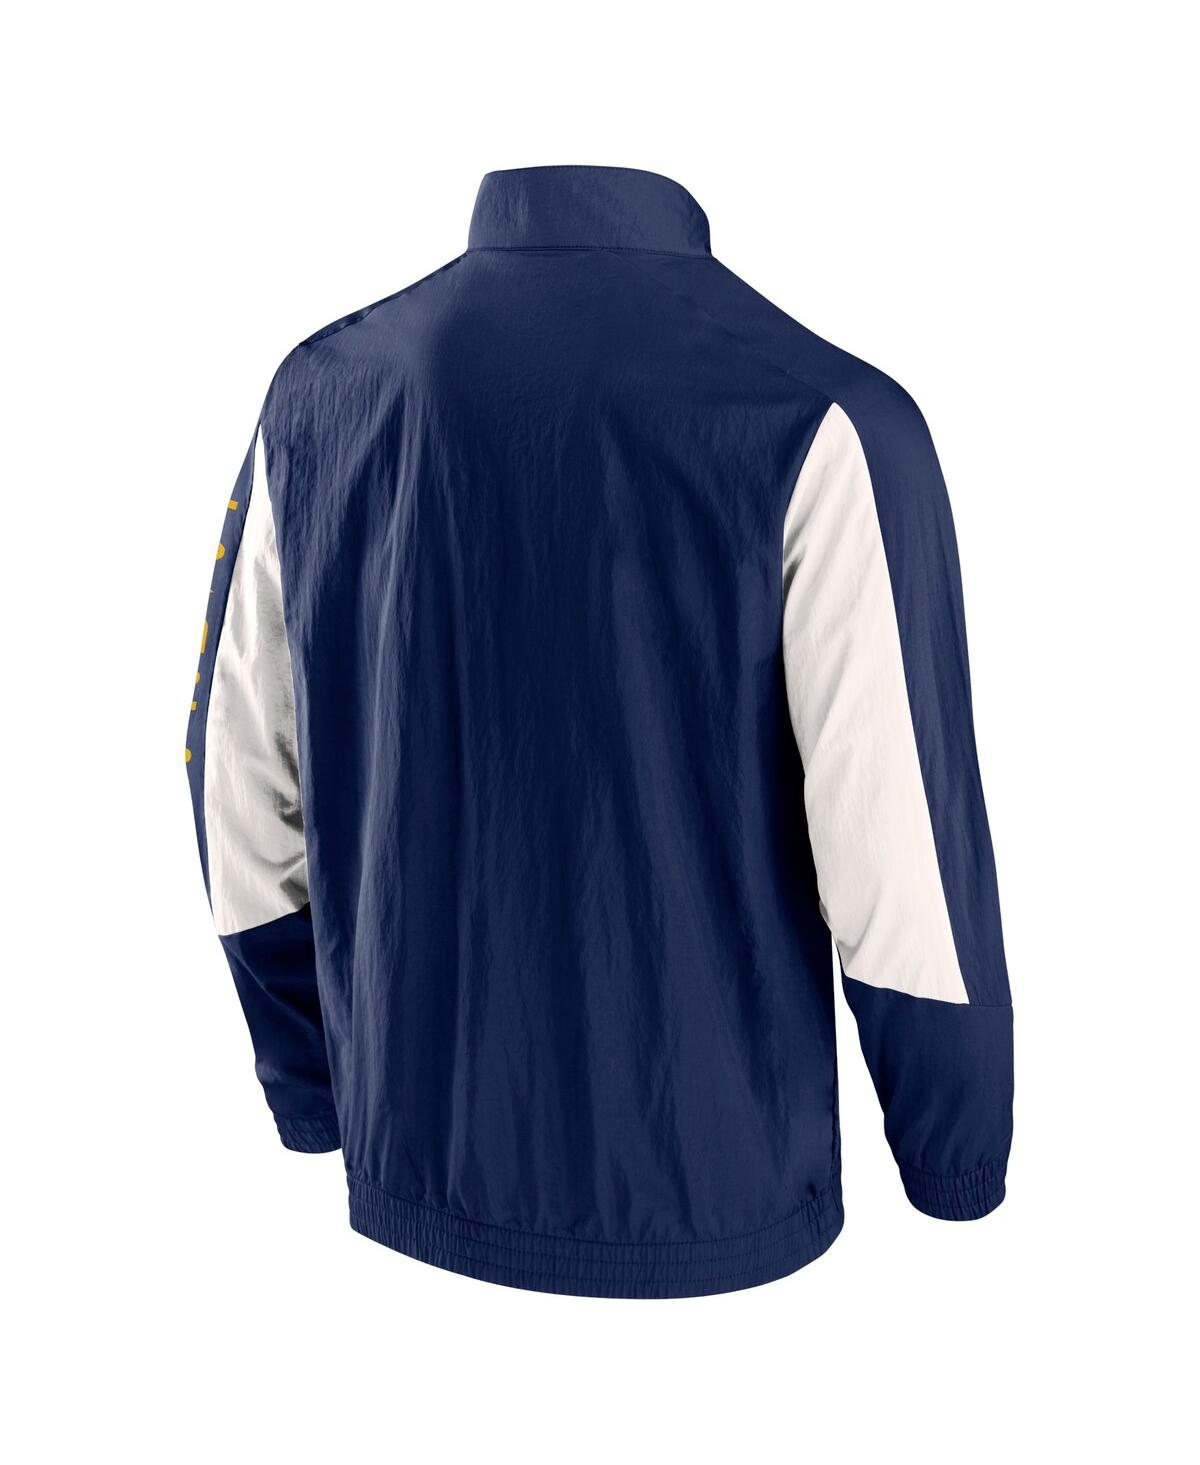 Shop Fanatics Men's  Navy La Galaxy Net Goal Raglan Full-zip Track Jacket